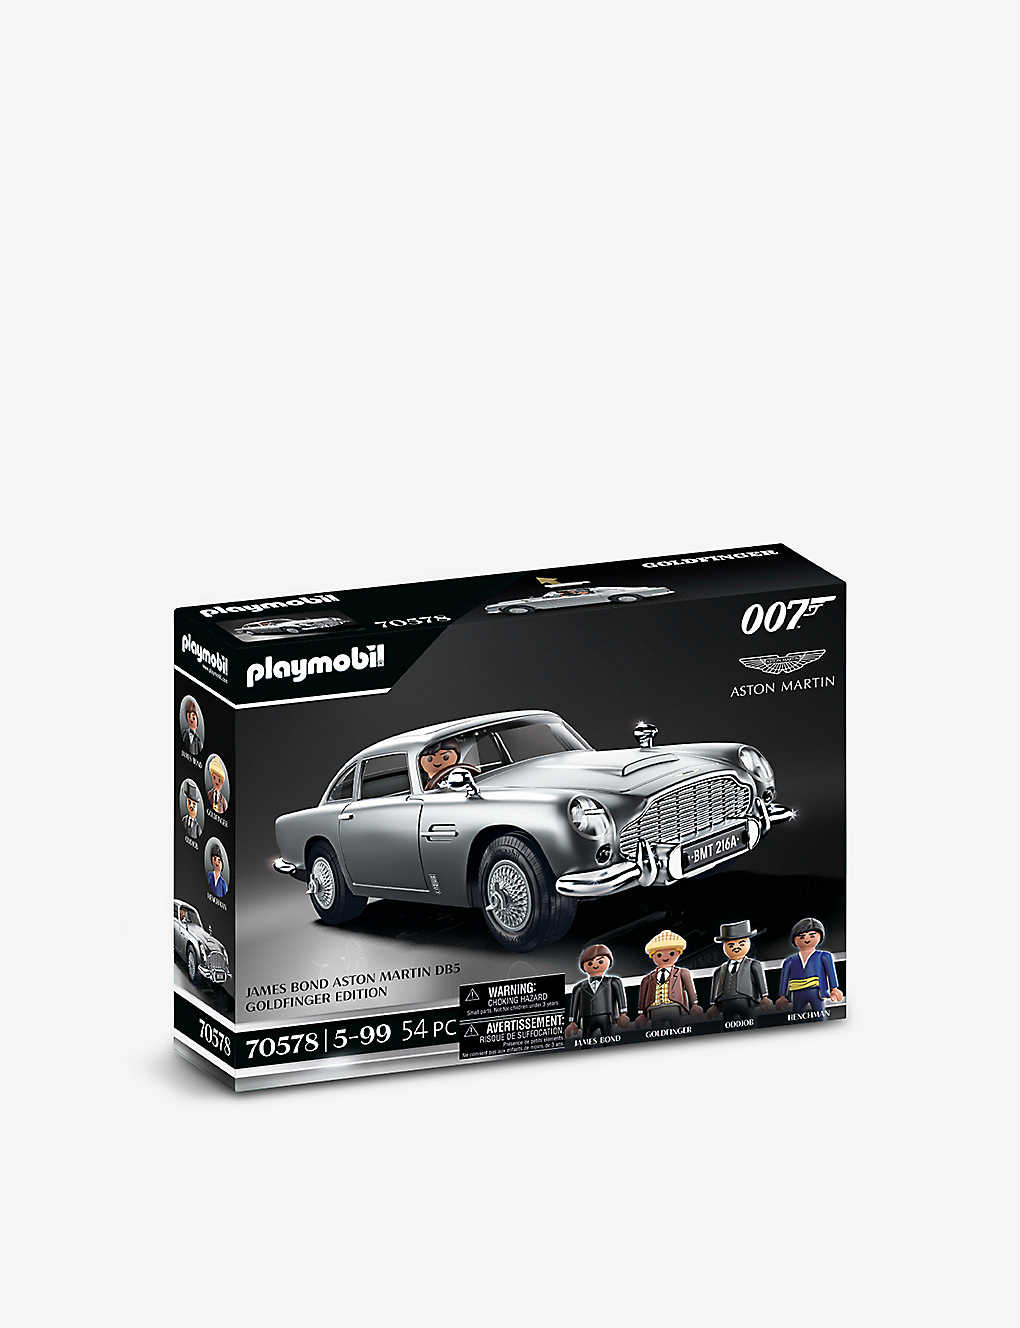 undefined | PLAYMOBIL James Bond Aston Martin DB5 Goldfinger Edition play set